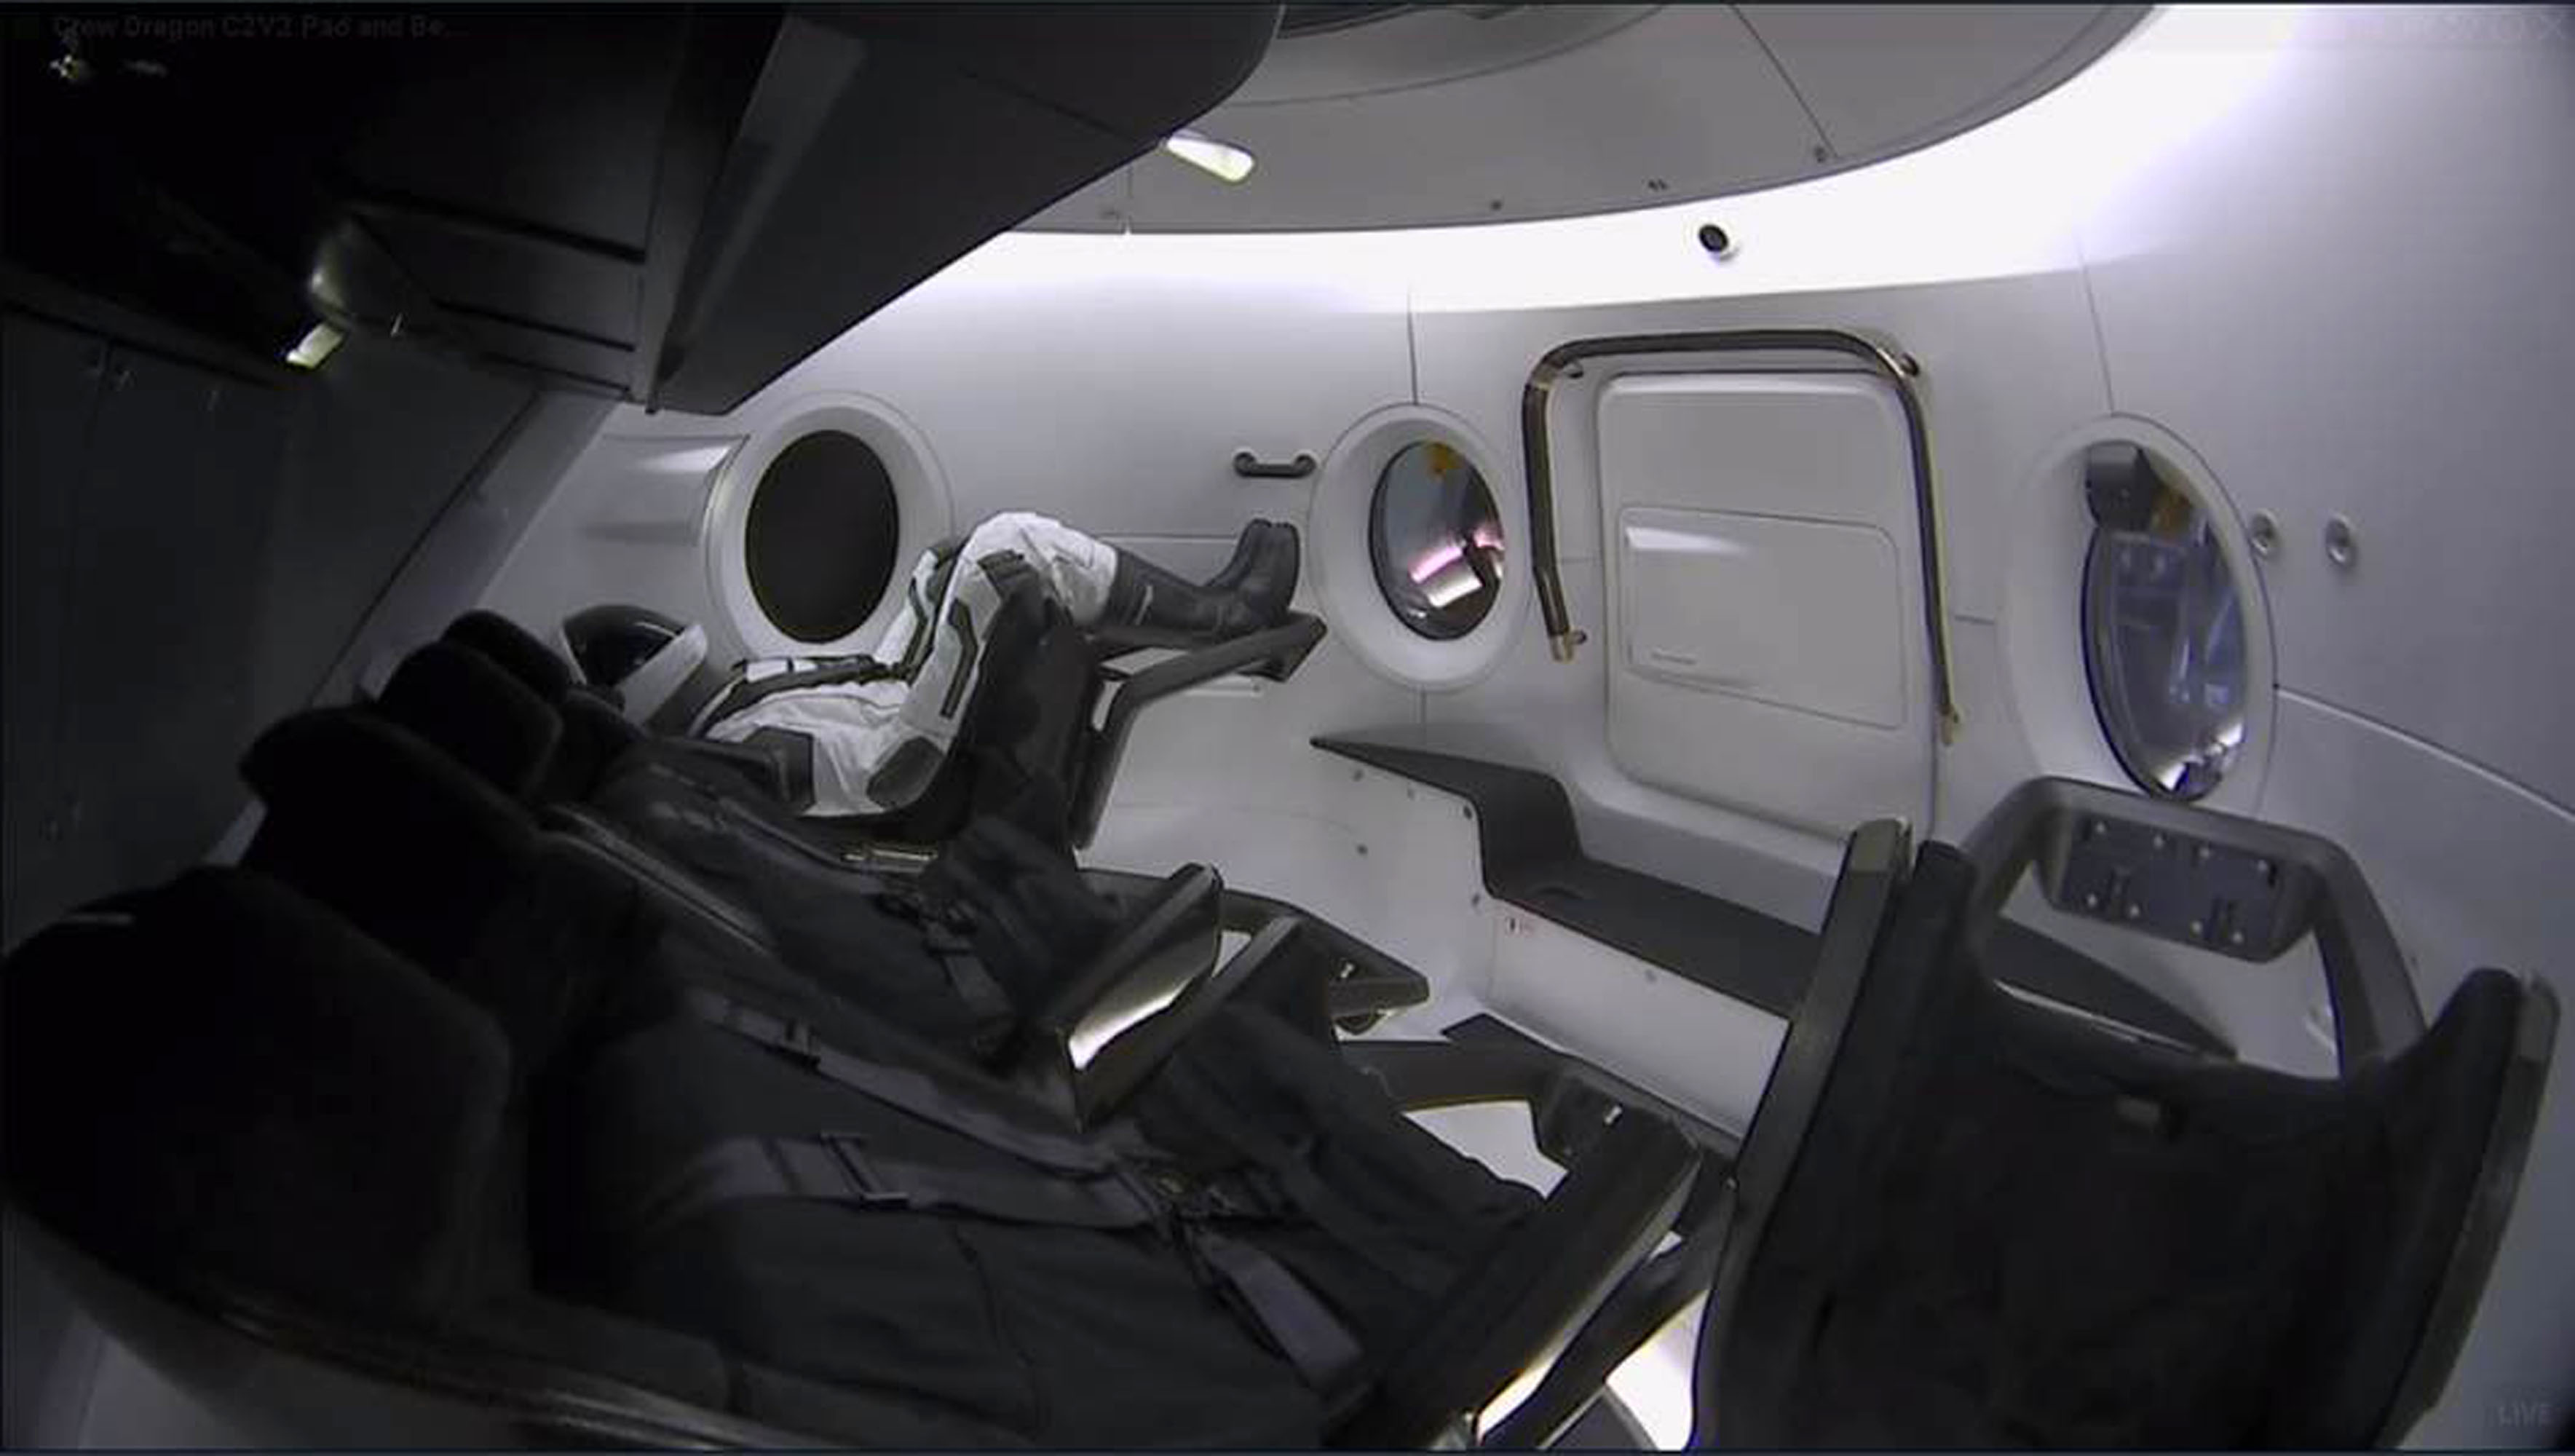 The Crew Dragon cockpit